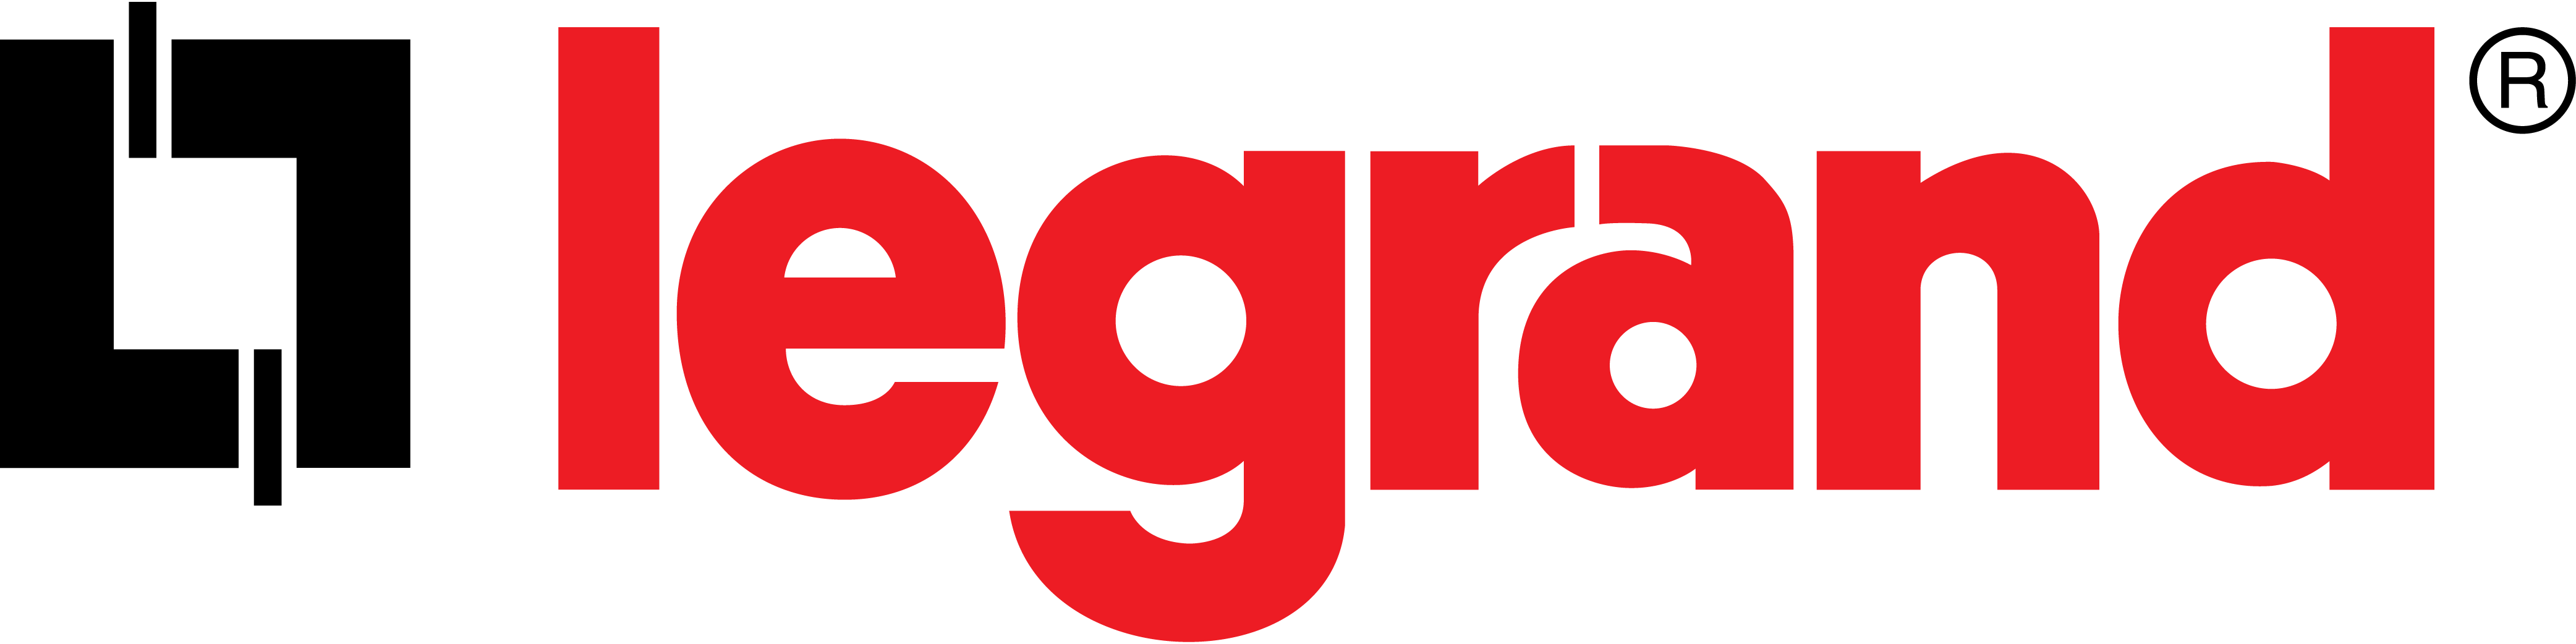 legrand-logo.png (59 KB)